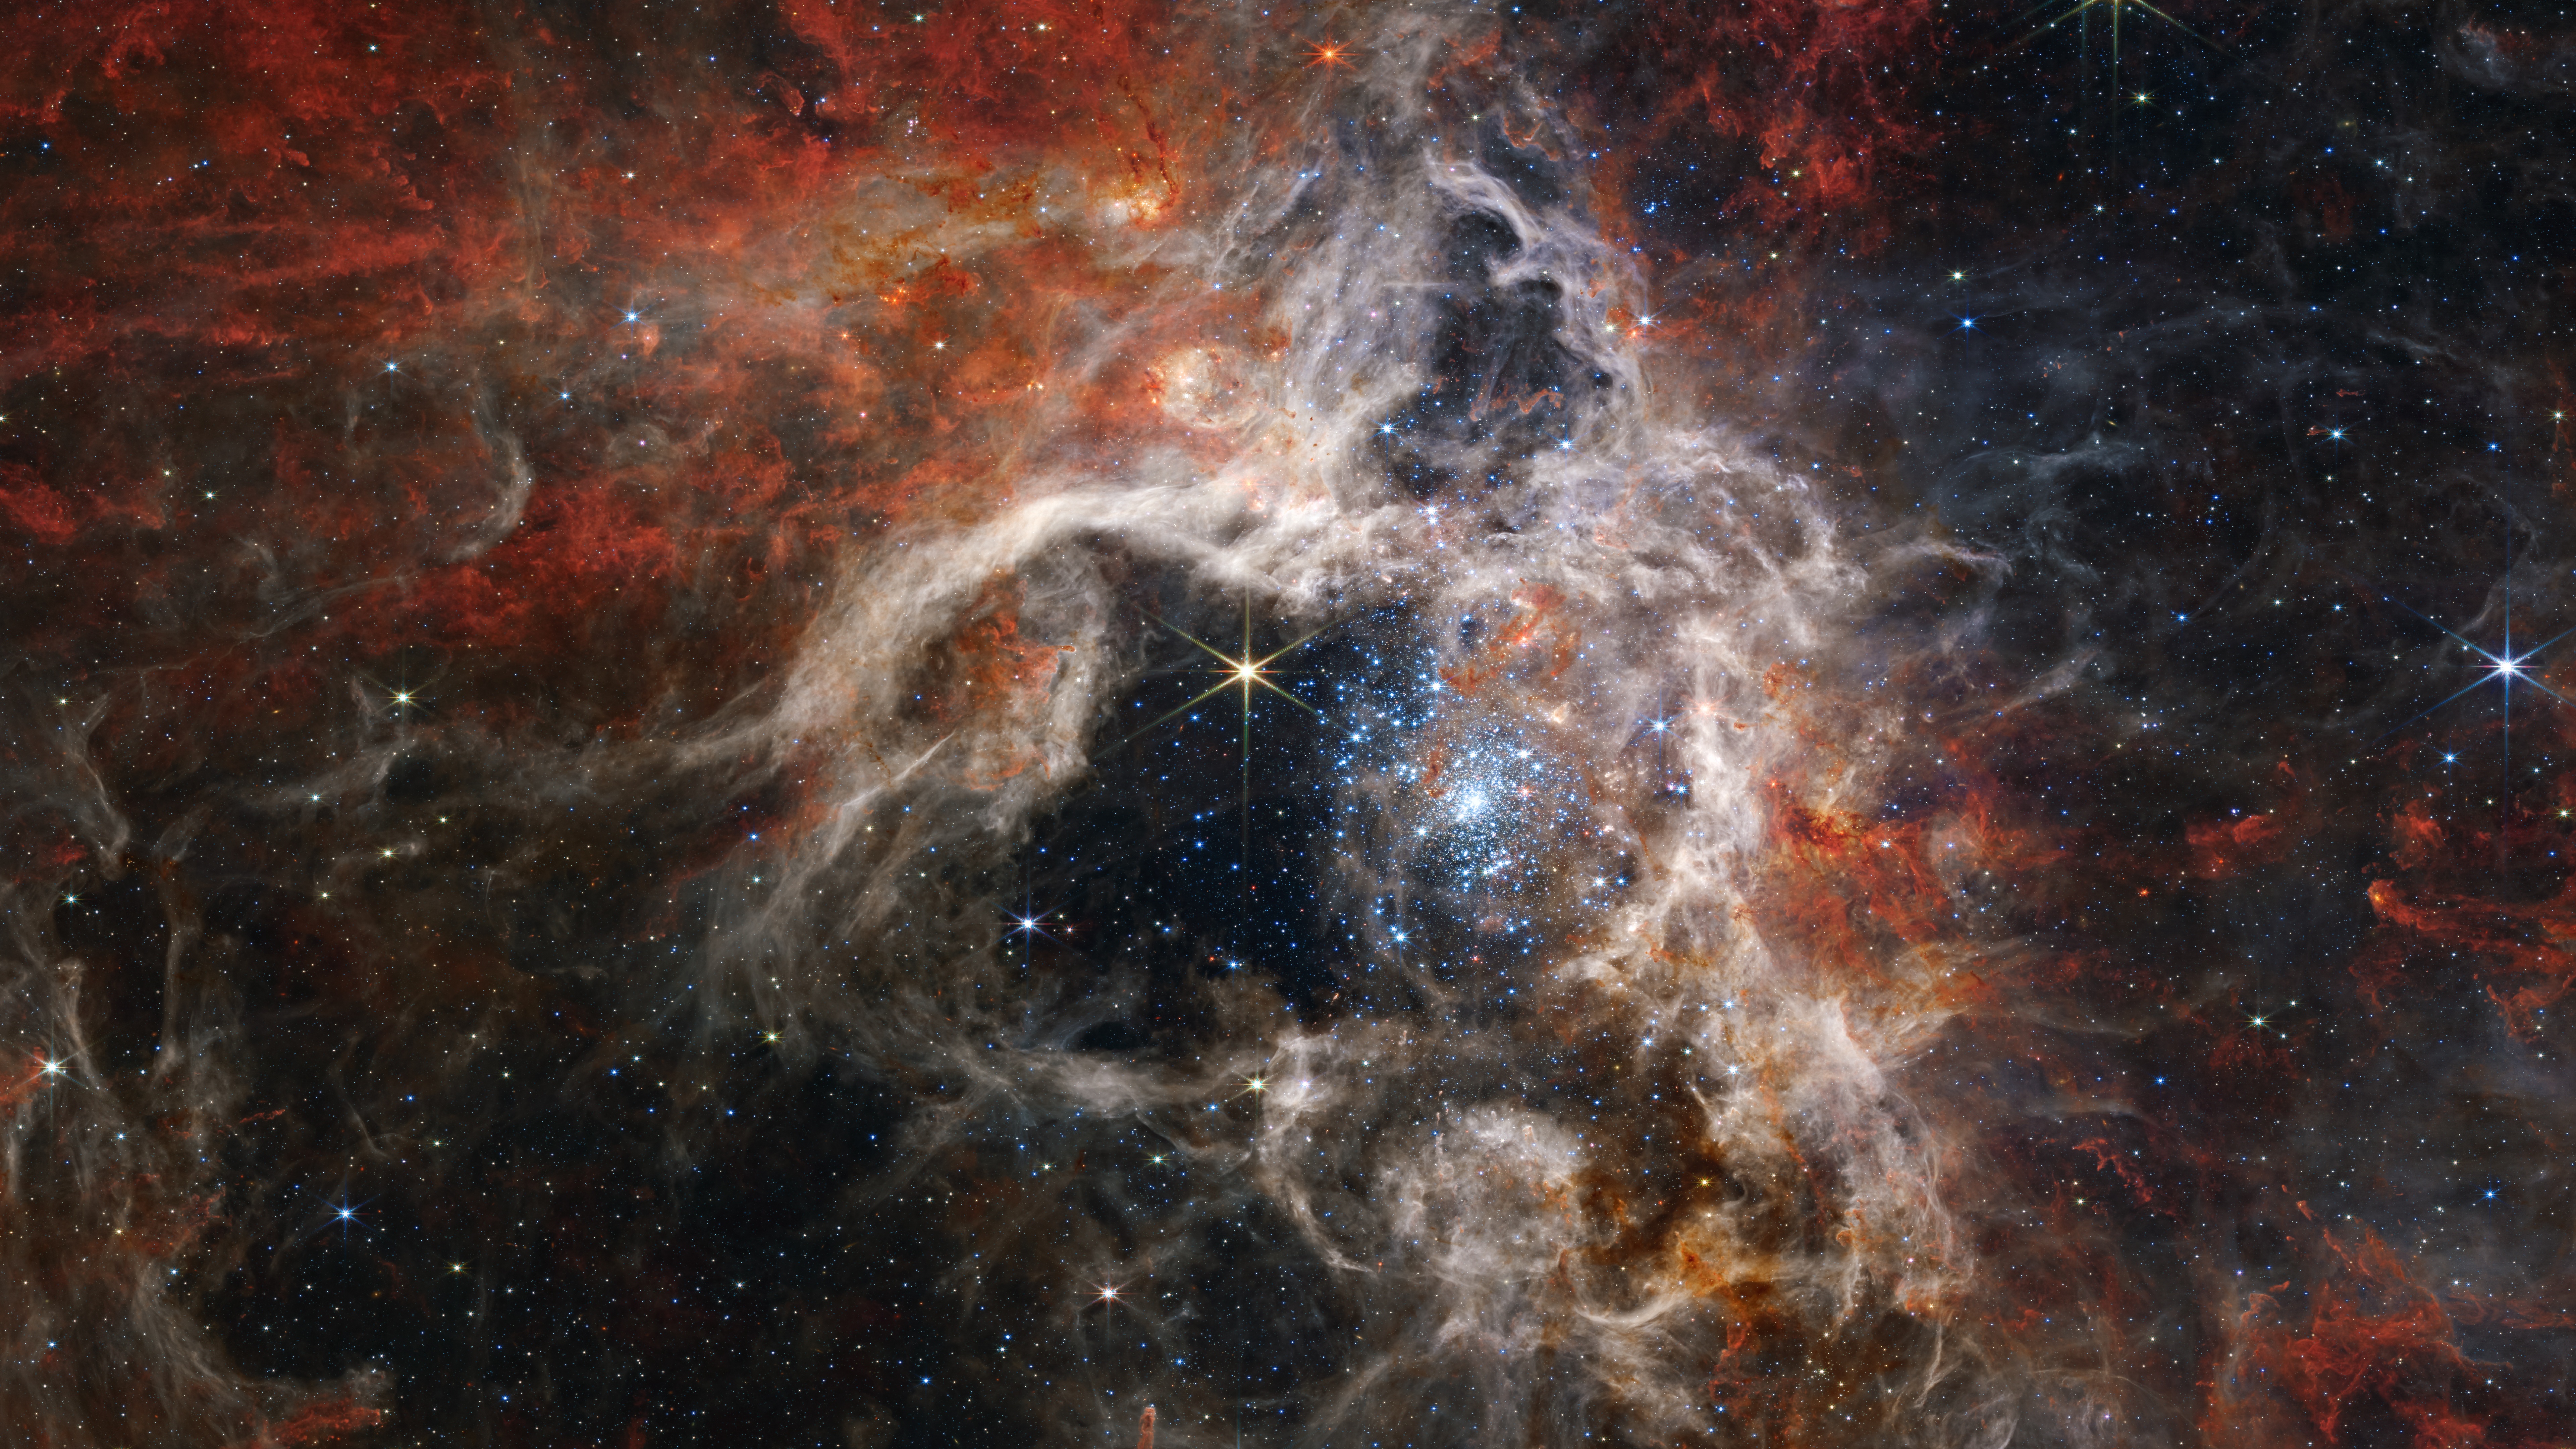 General 7680x4320 James Webb Space Telescope Tarantula Nebula space telescope astronomy NASA USA stars